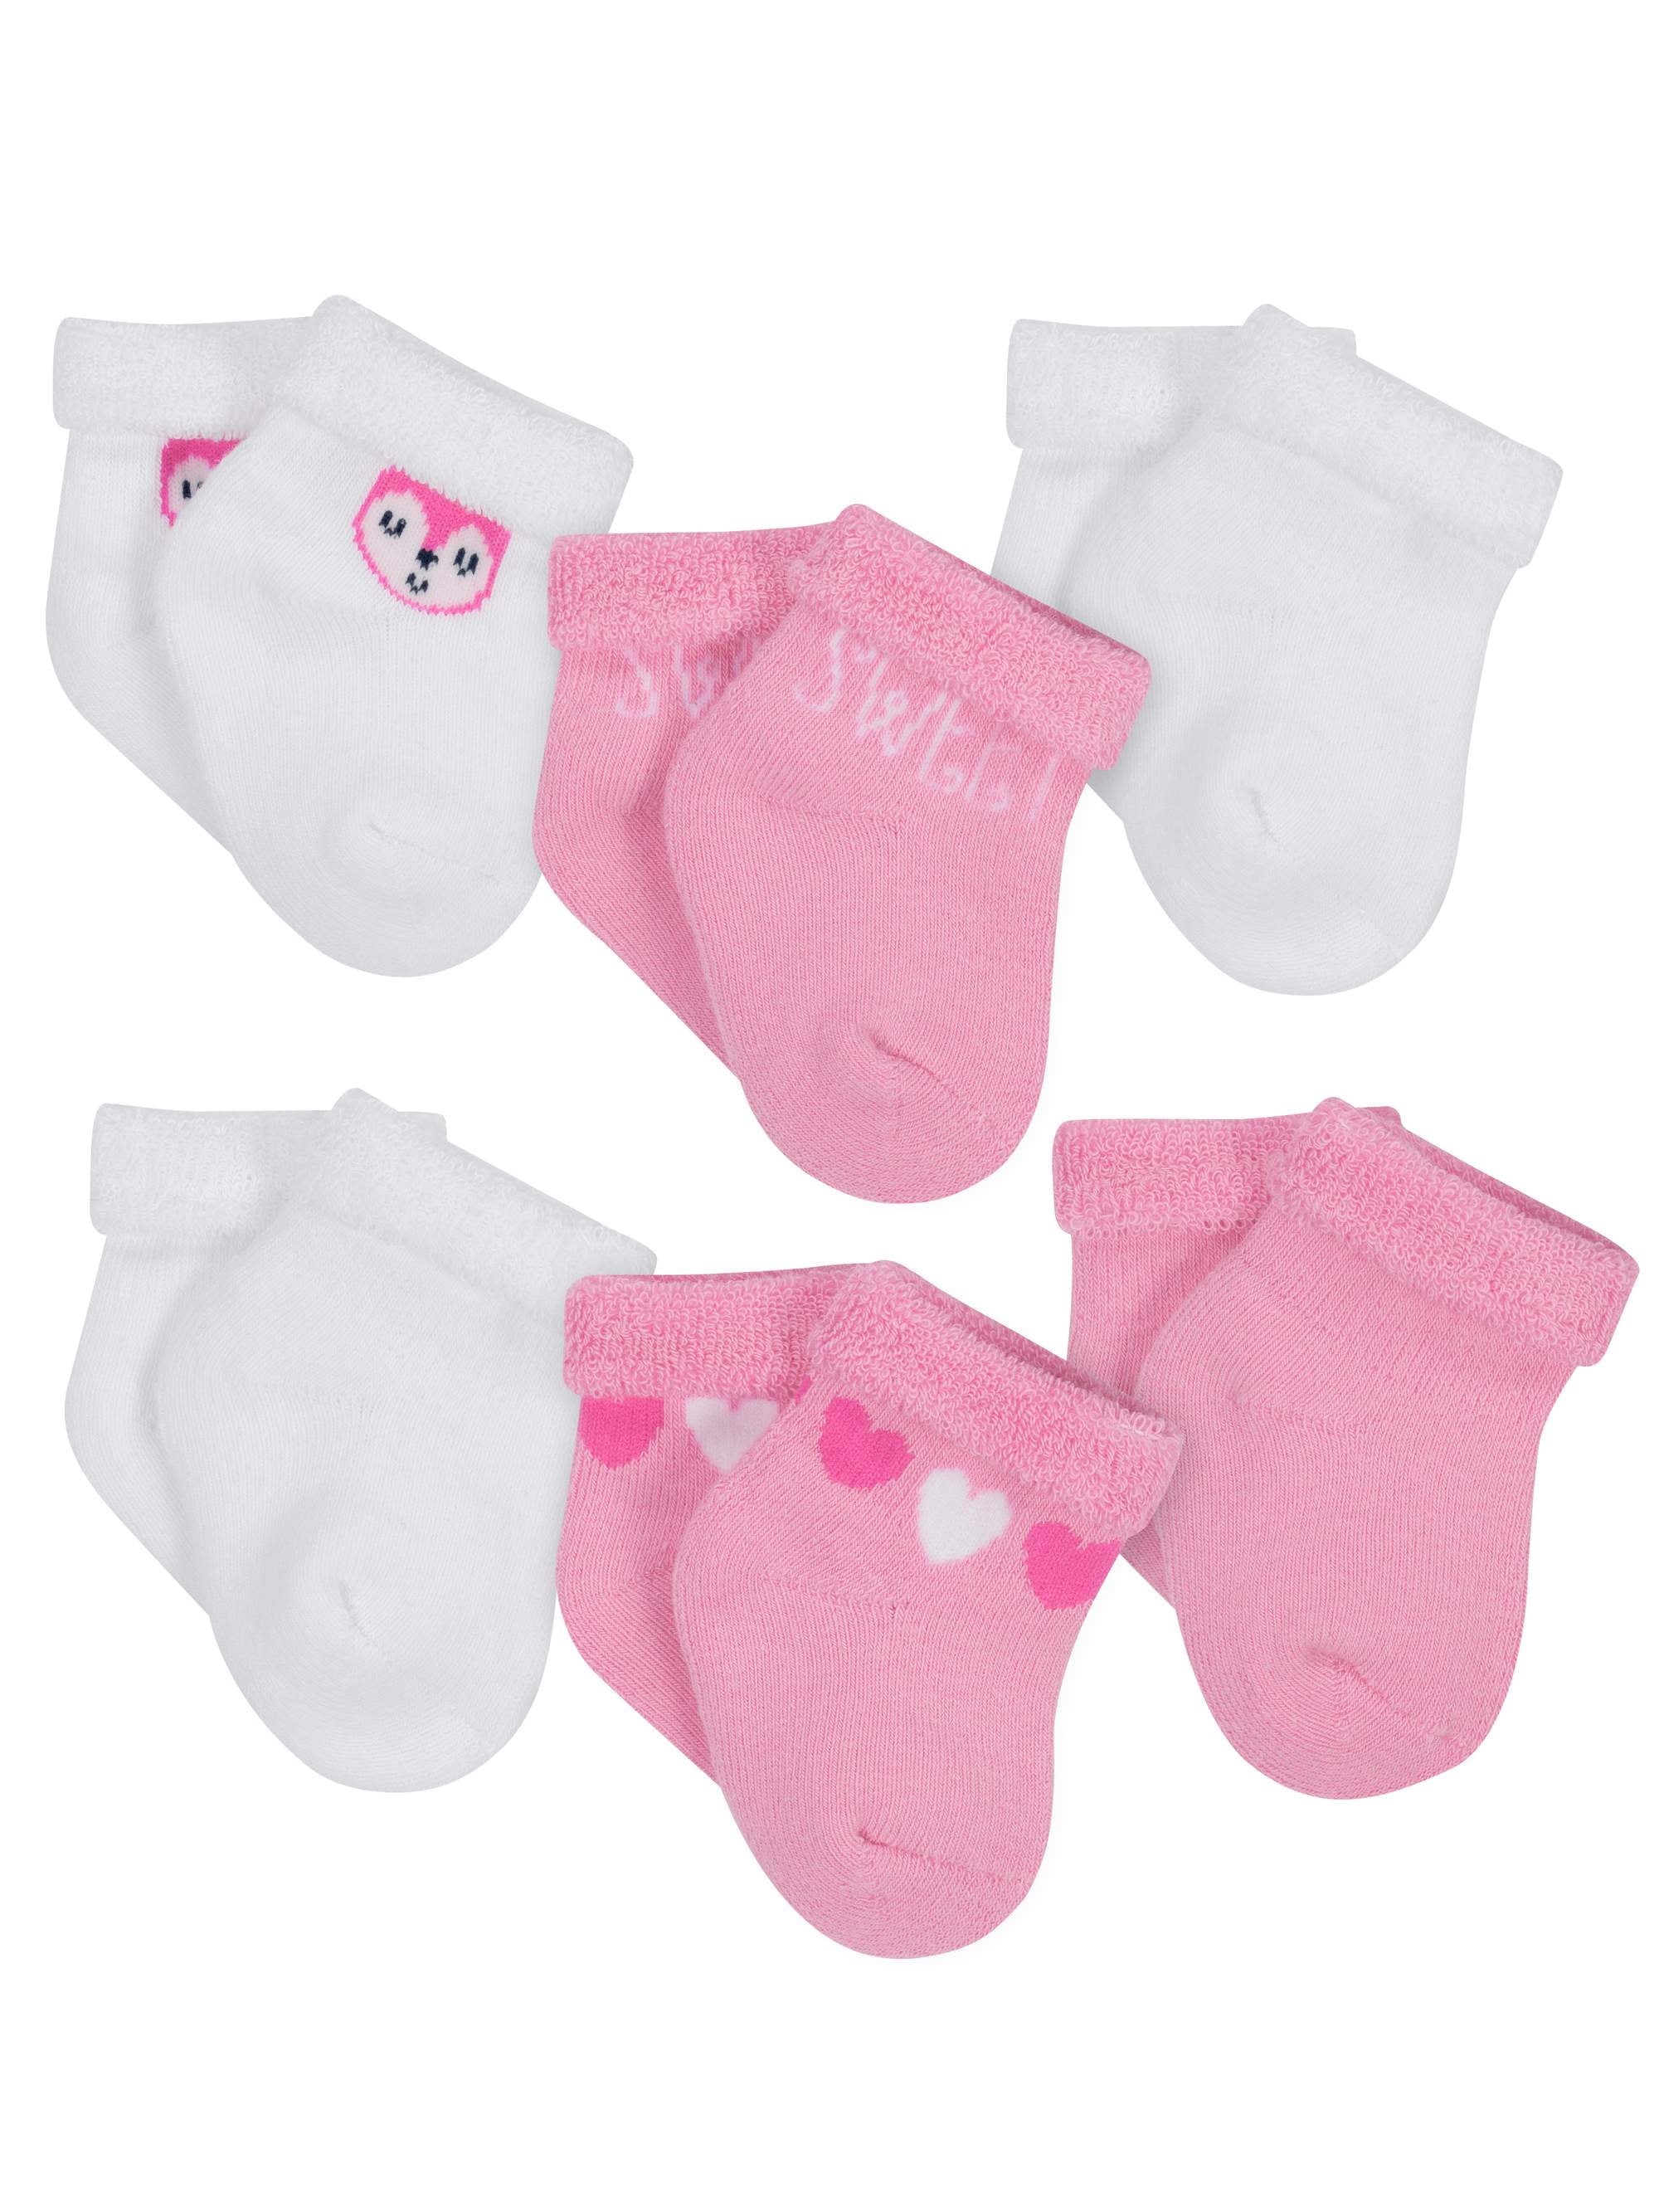 infant bootie socks